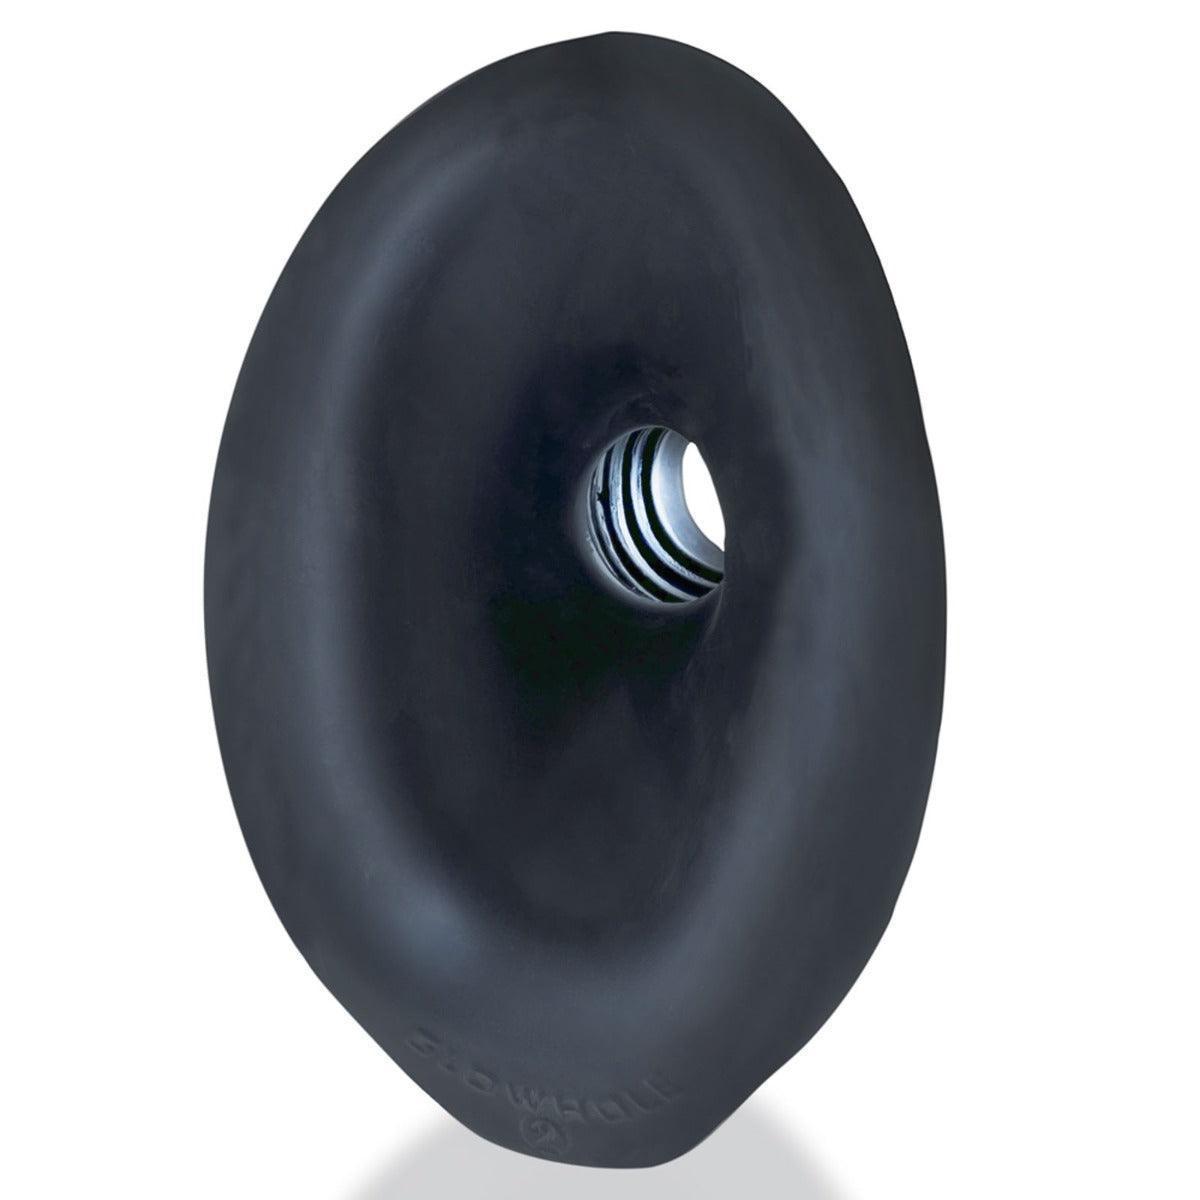 Oxballs Morphhole-1 Gaper Plug Black Ice Small